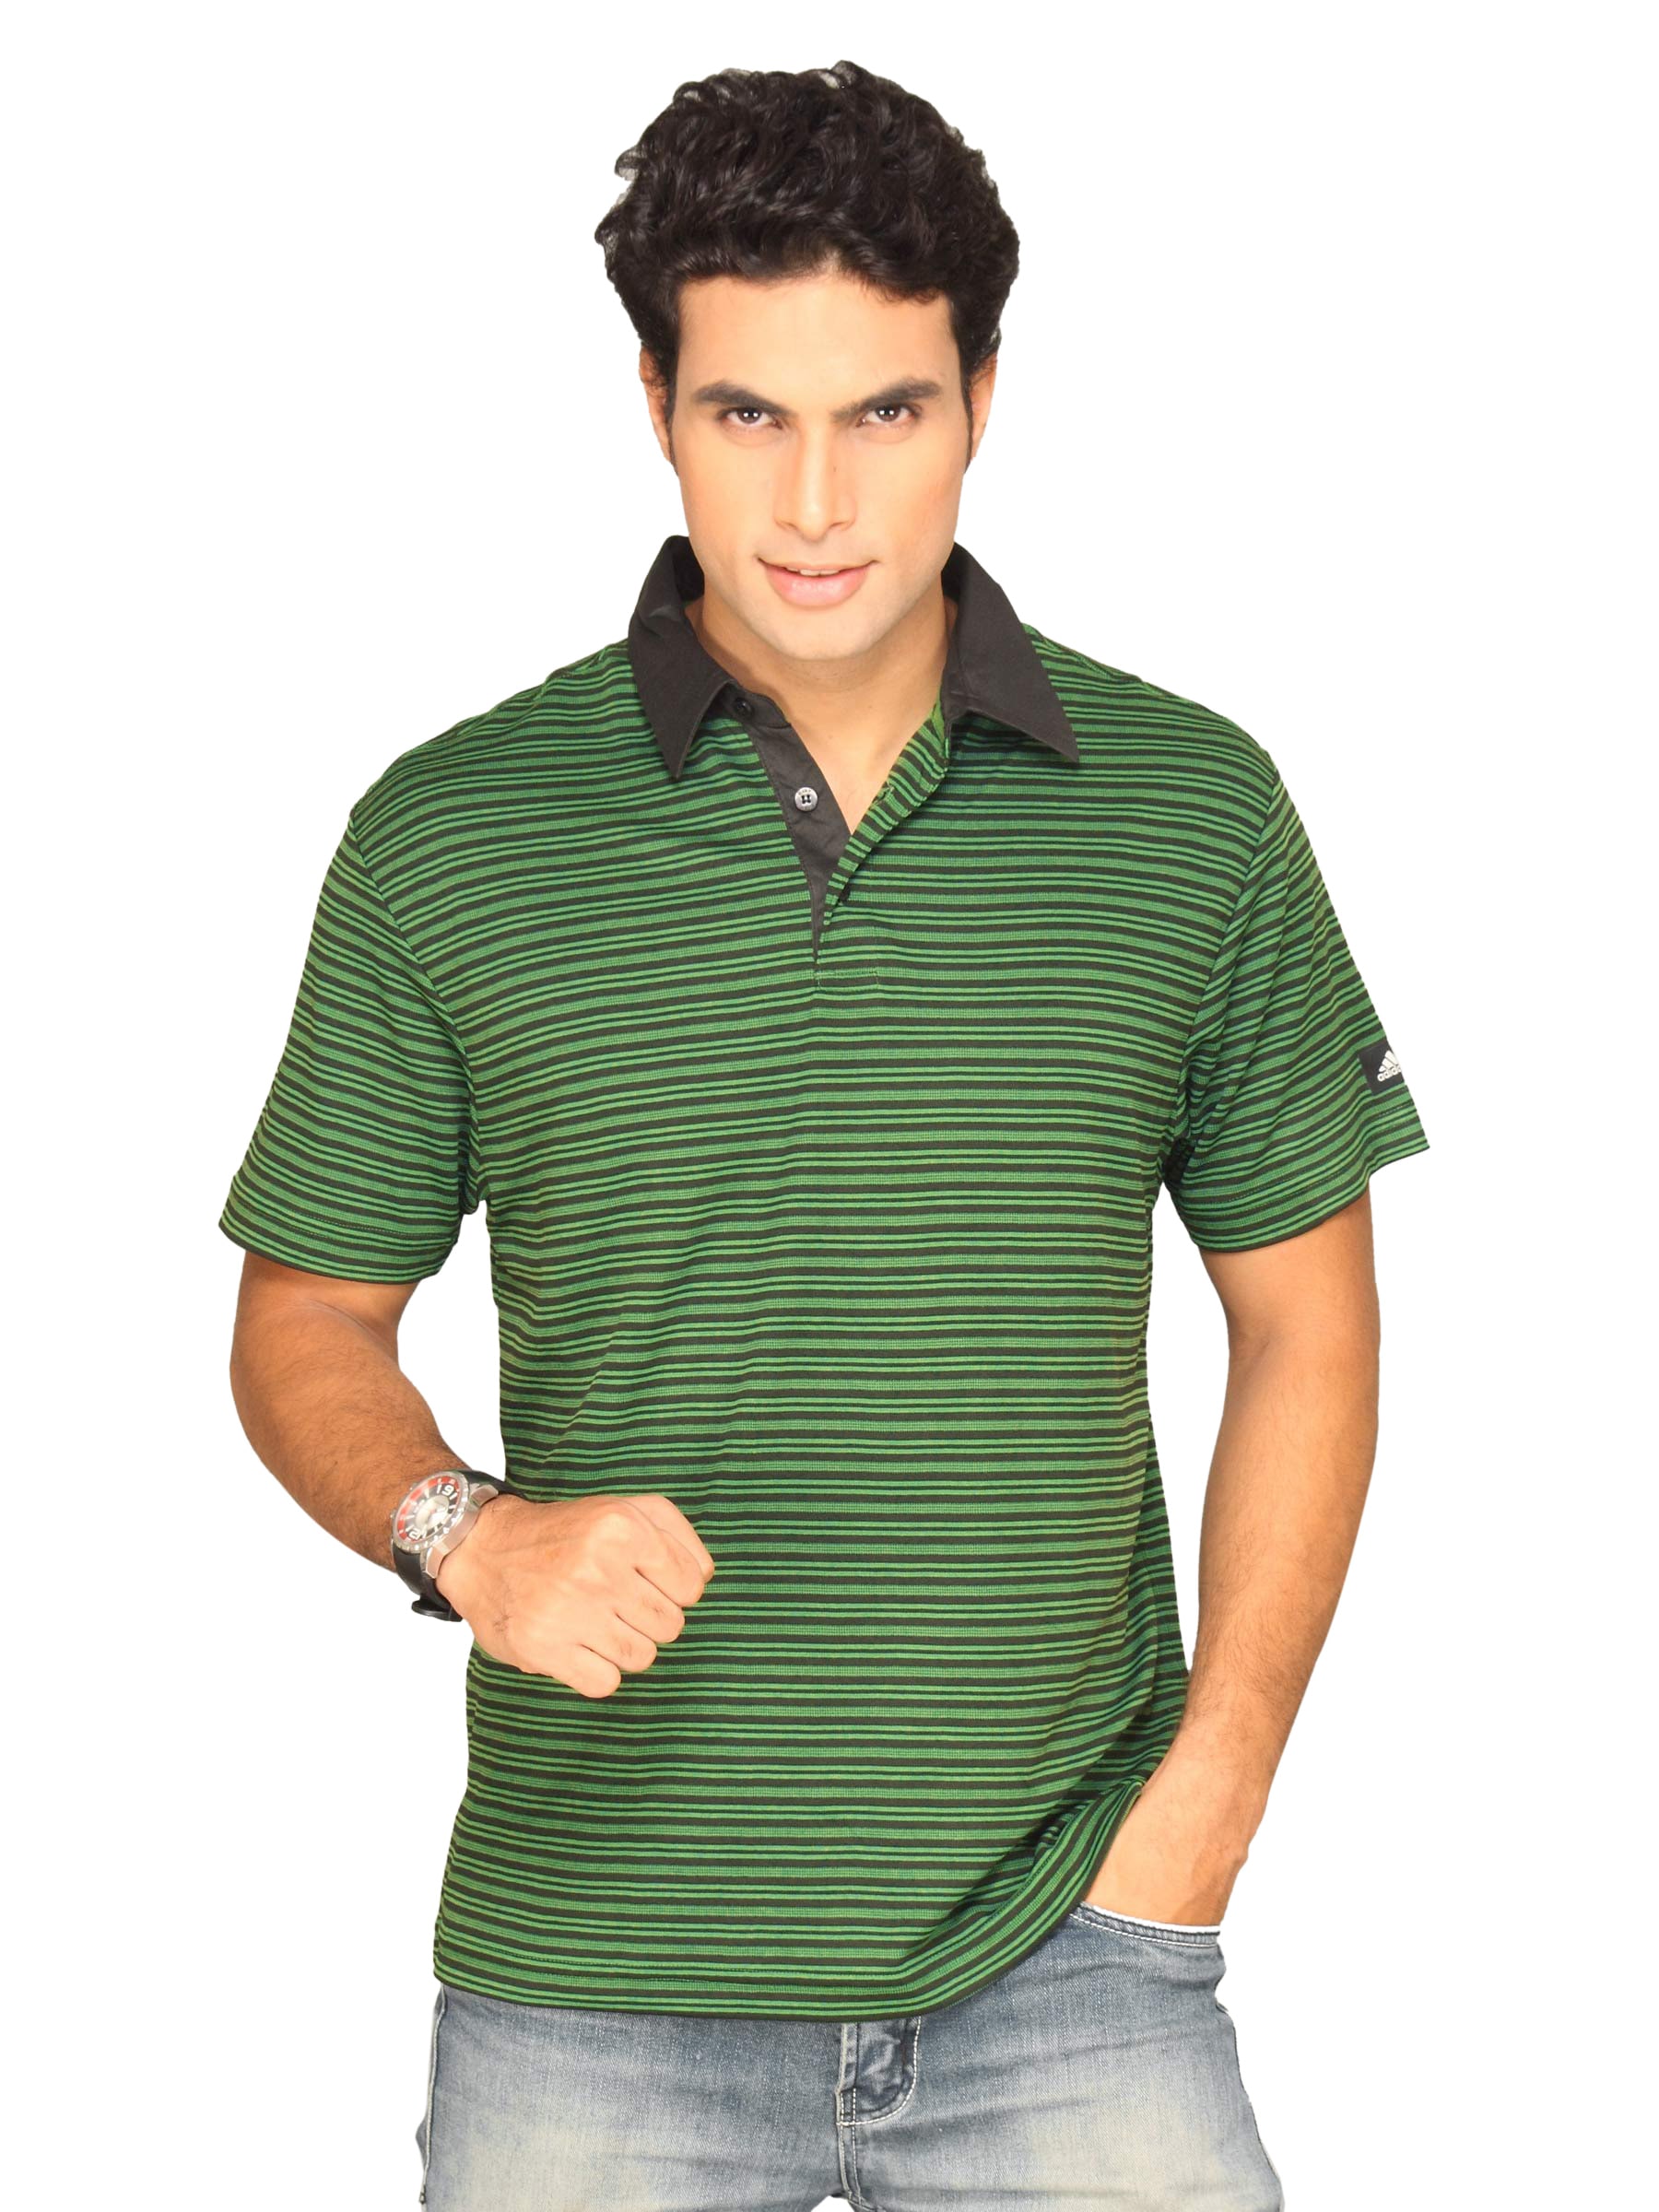 ADIDAS Men's Strip Polo Black Green T-shirt